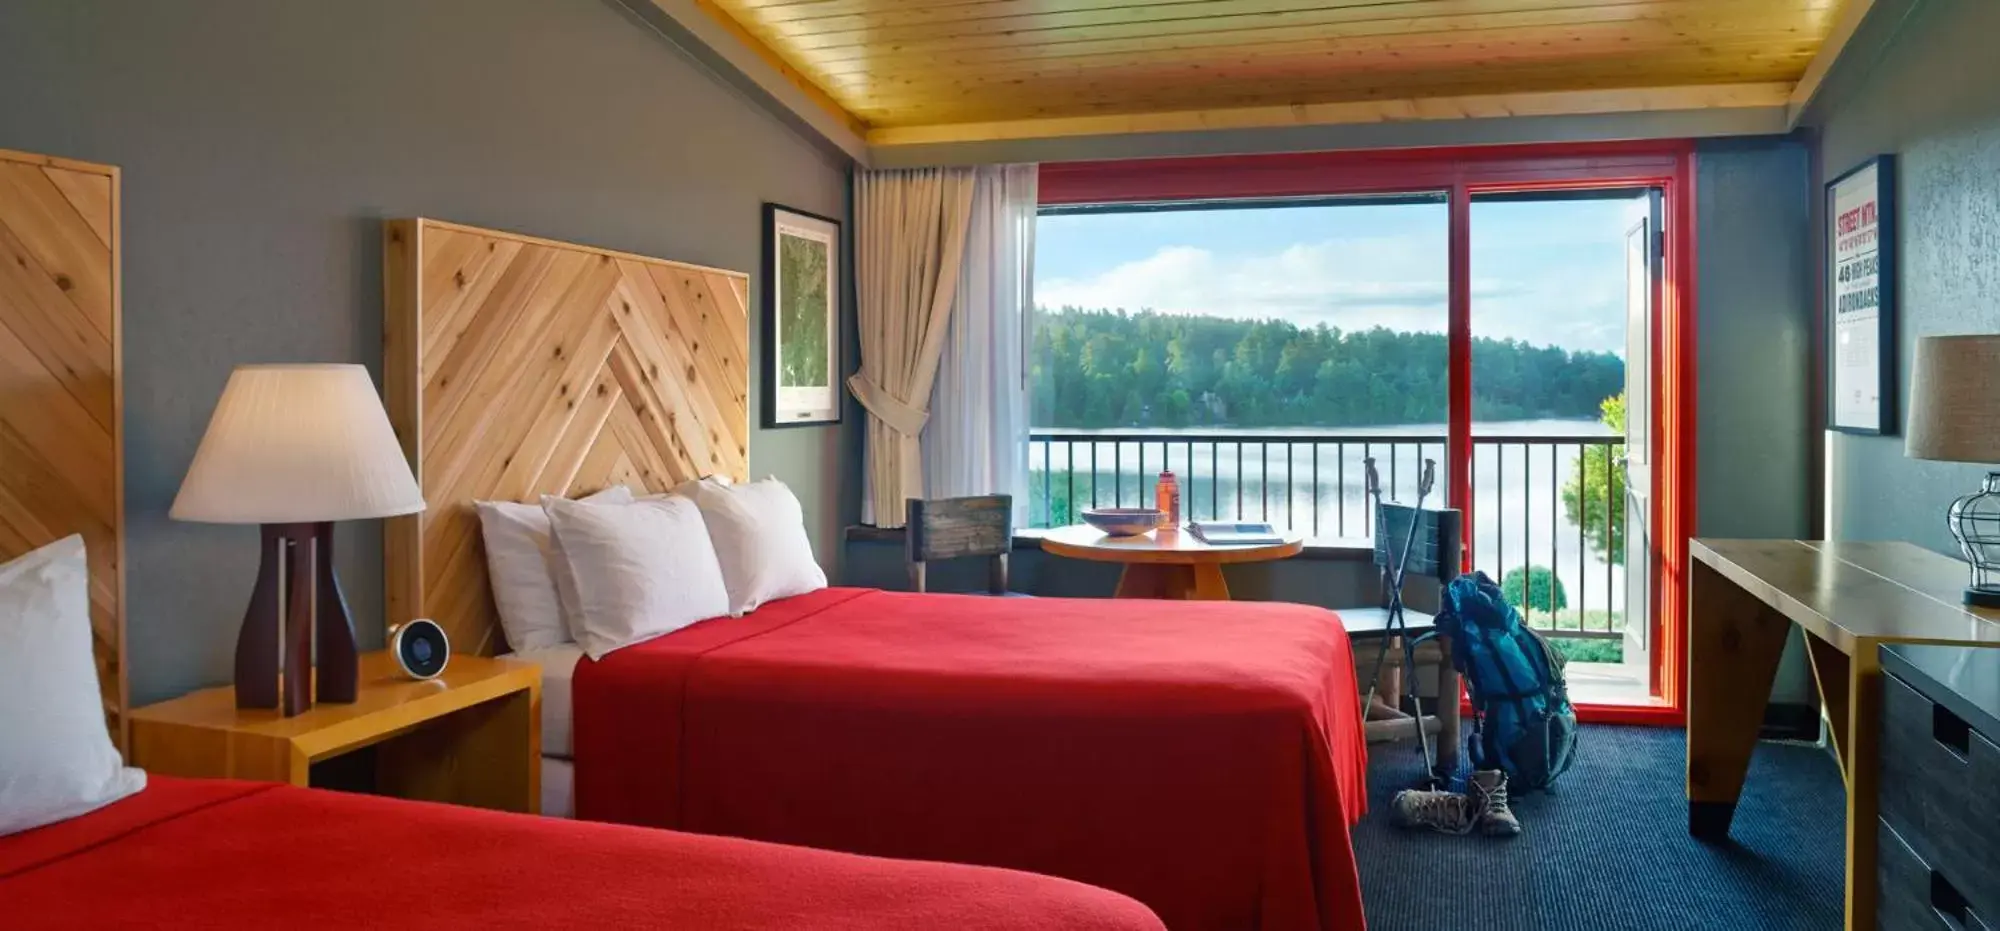 Patio, Bed in Lake House at High Peaks Resort